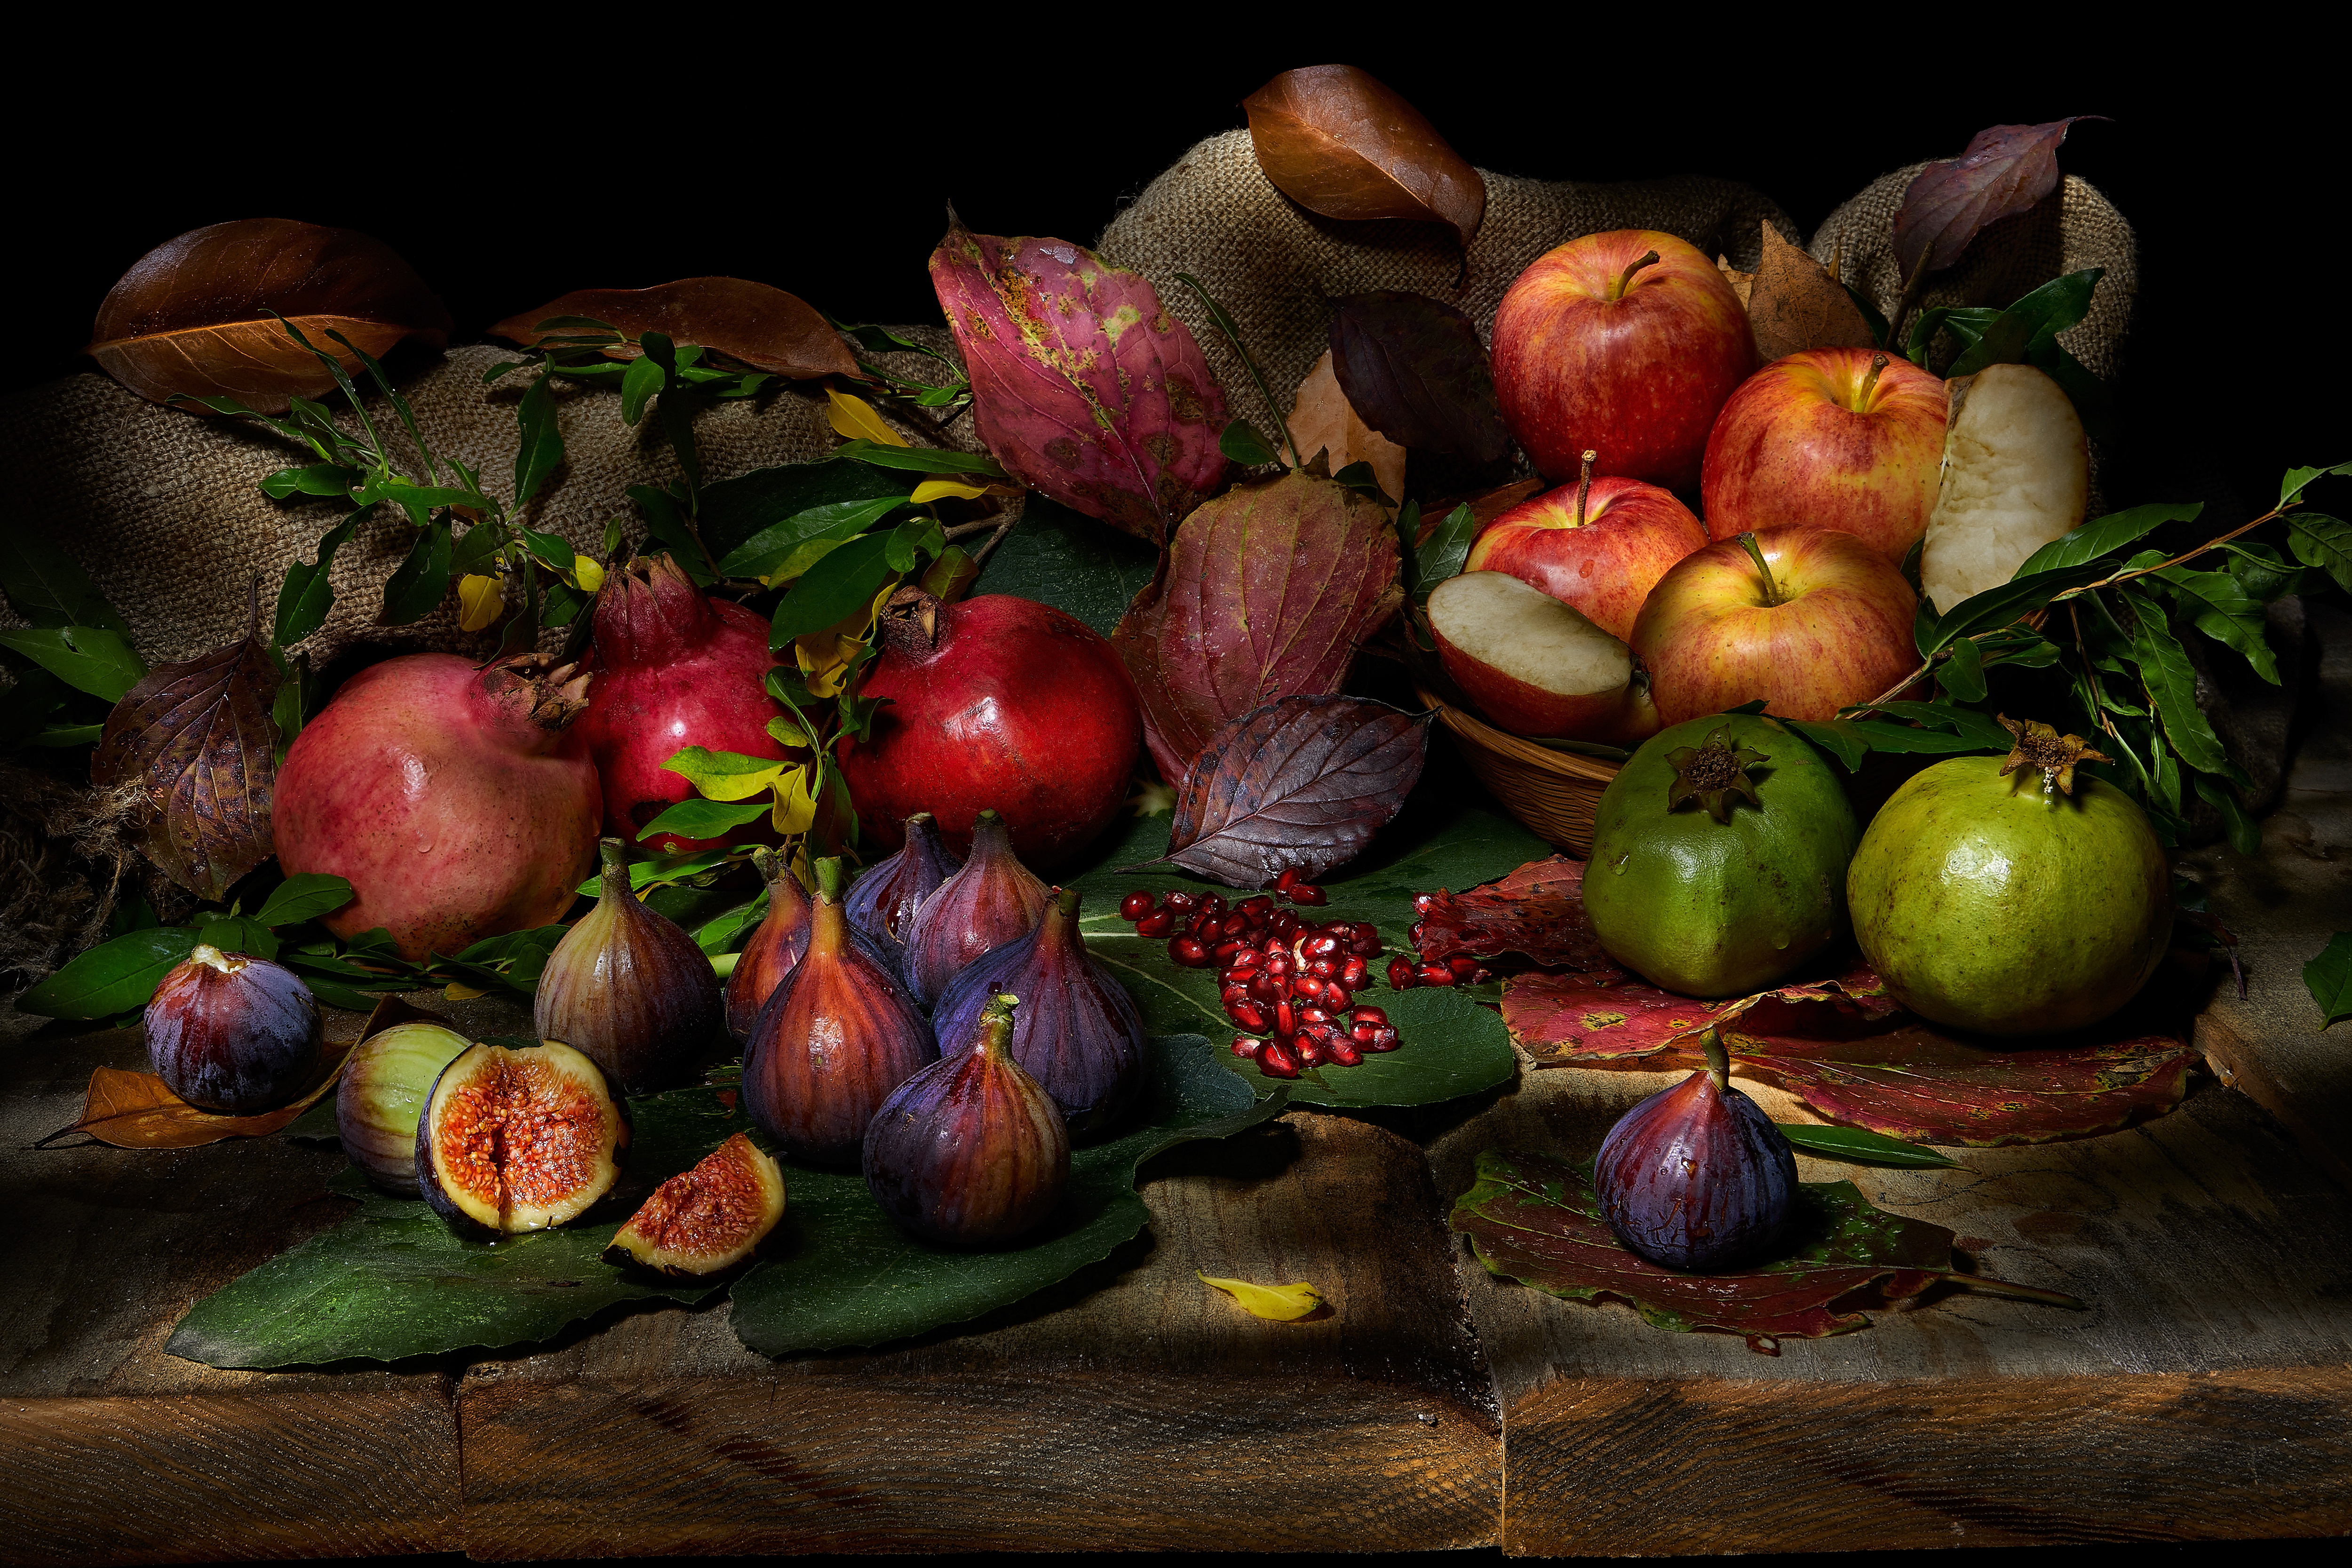 470541 descargar imagen alimento, fruta, manzana, higo, bodegón, frutas: fondos de pantalla y protectores de pantalla gratis